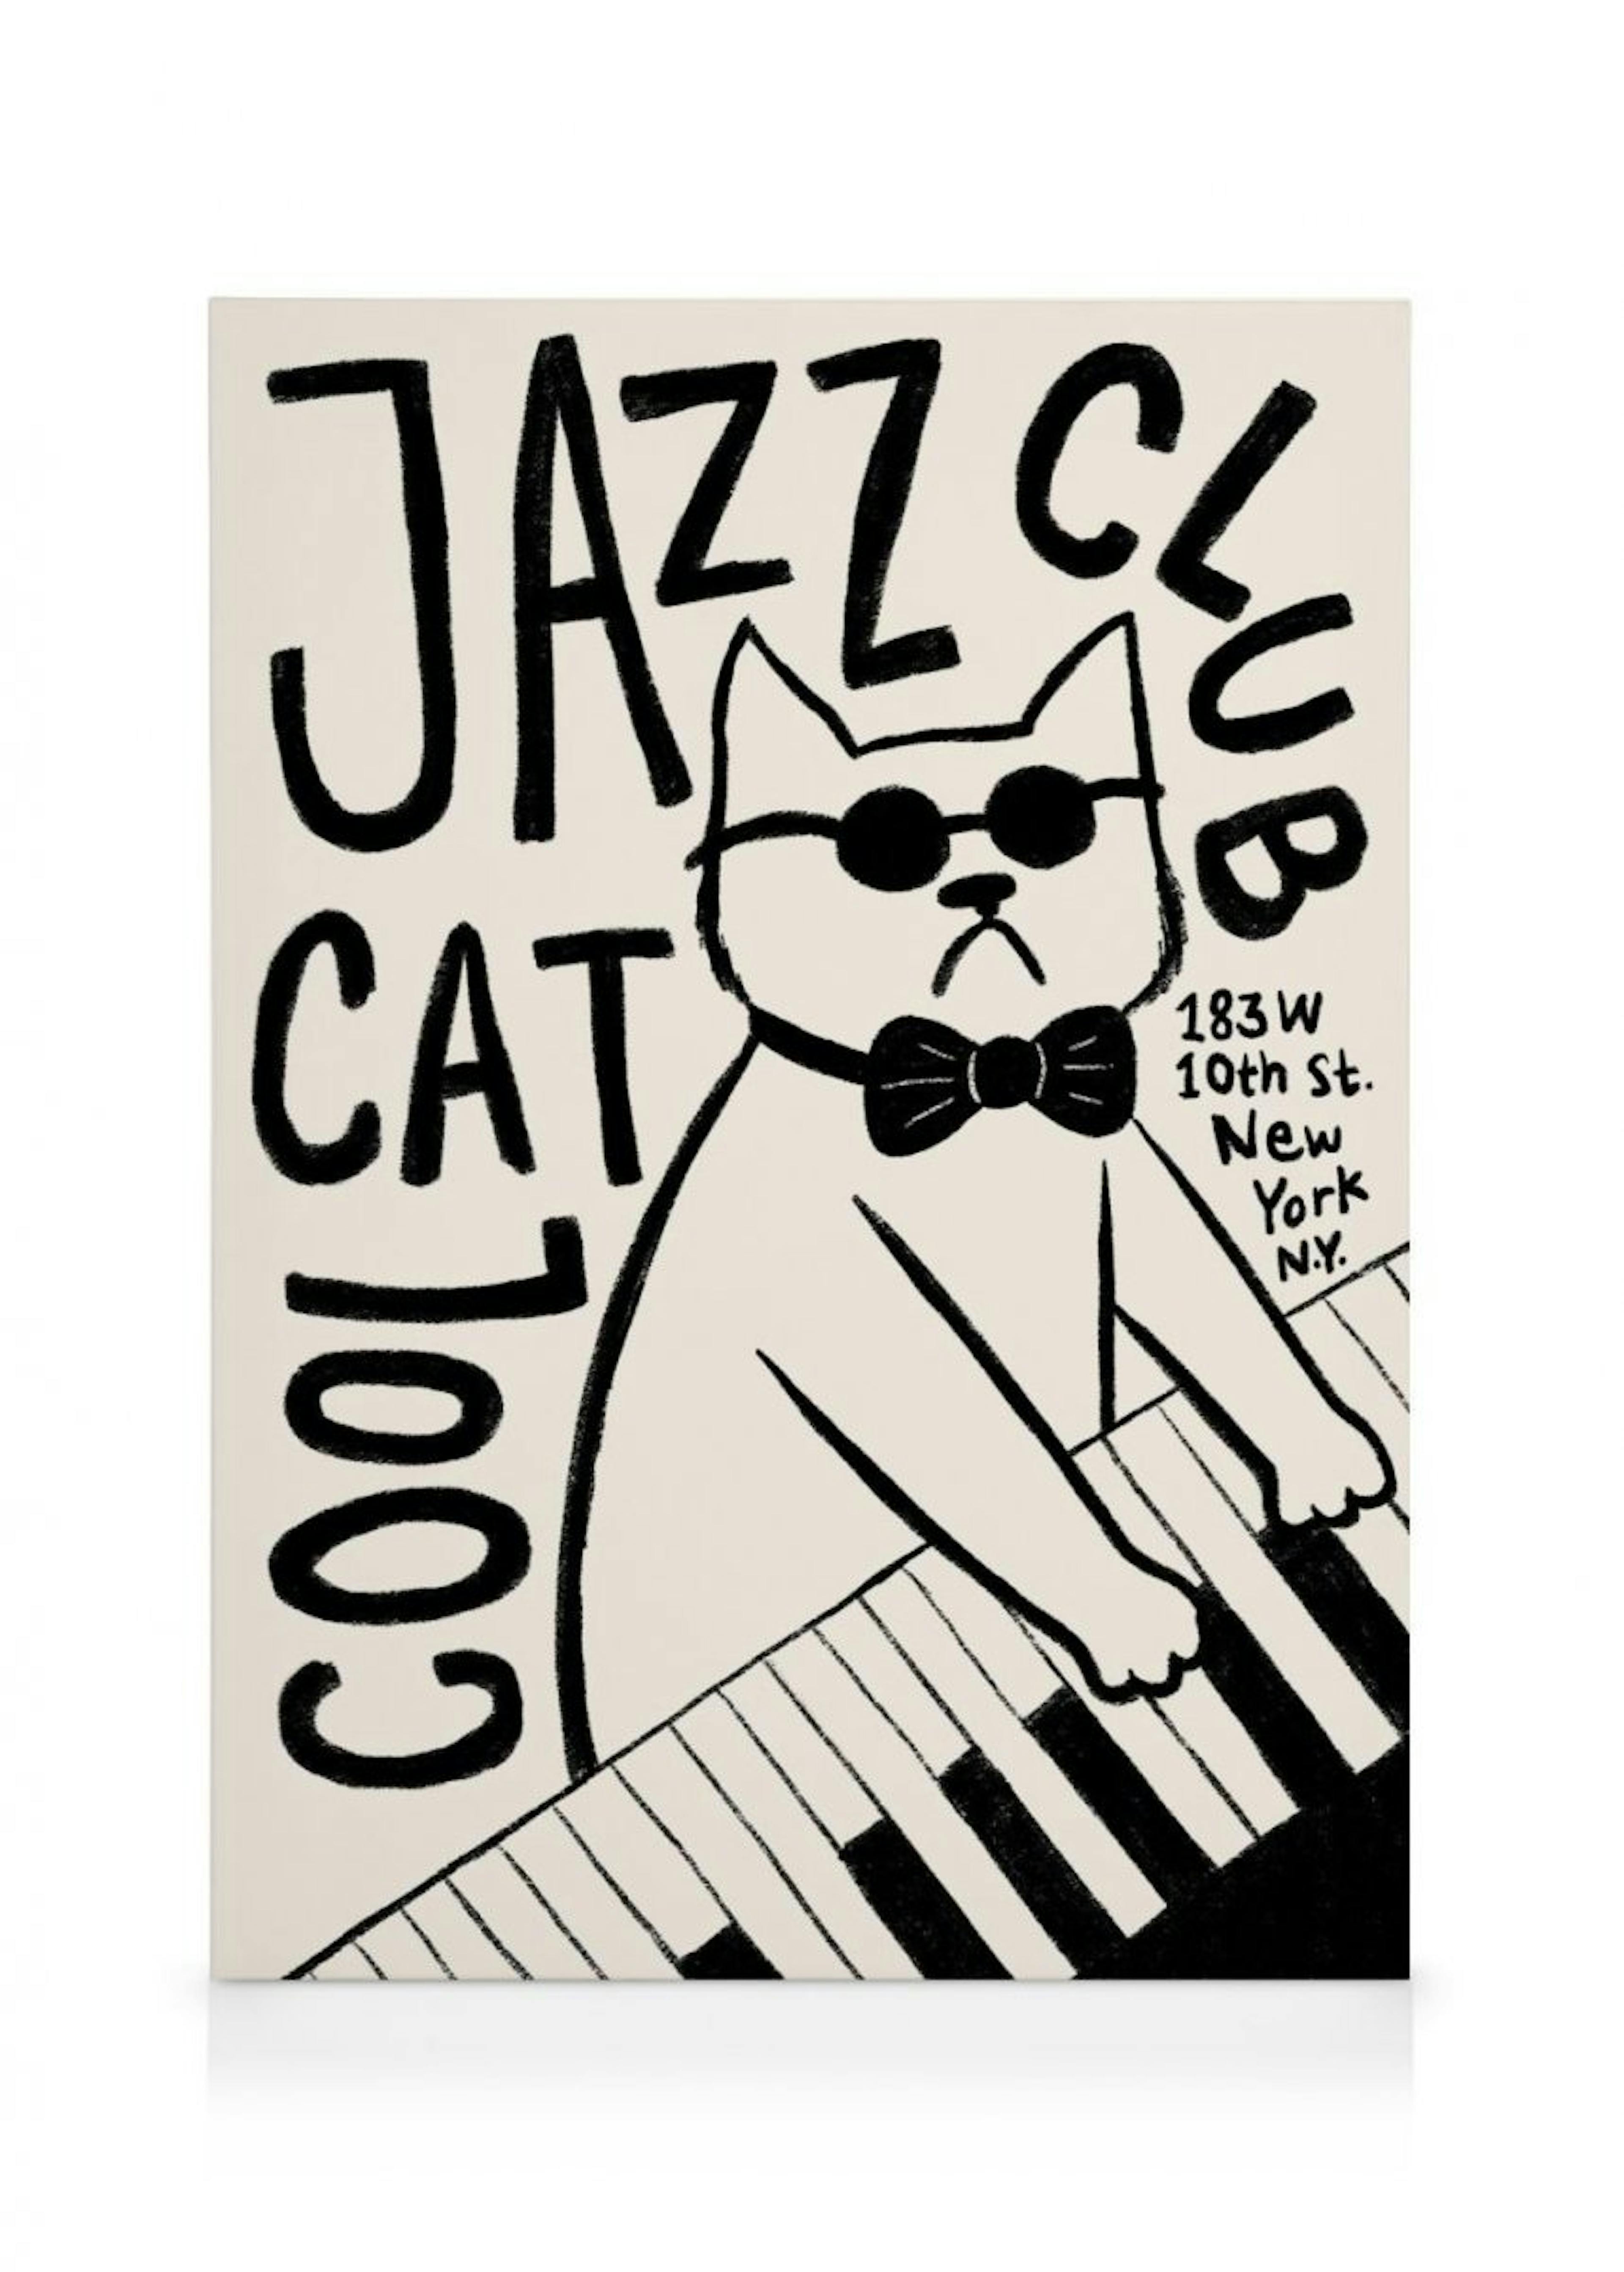 Cool Cat Jazz Club Stampa su Tela 0